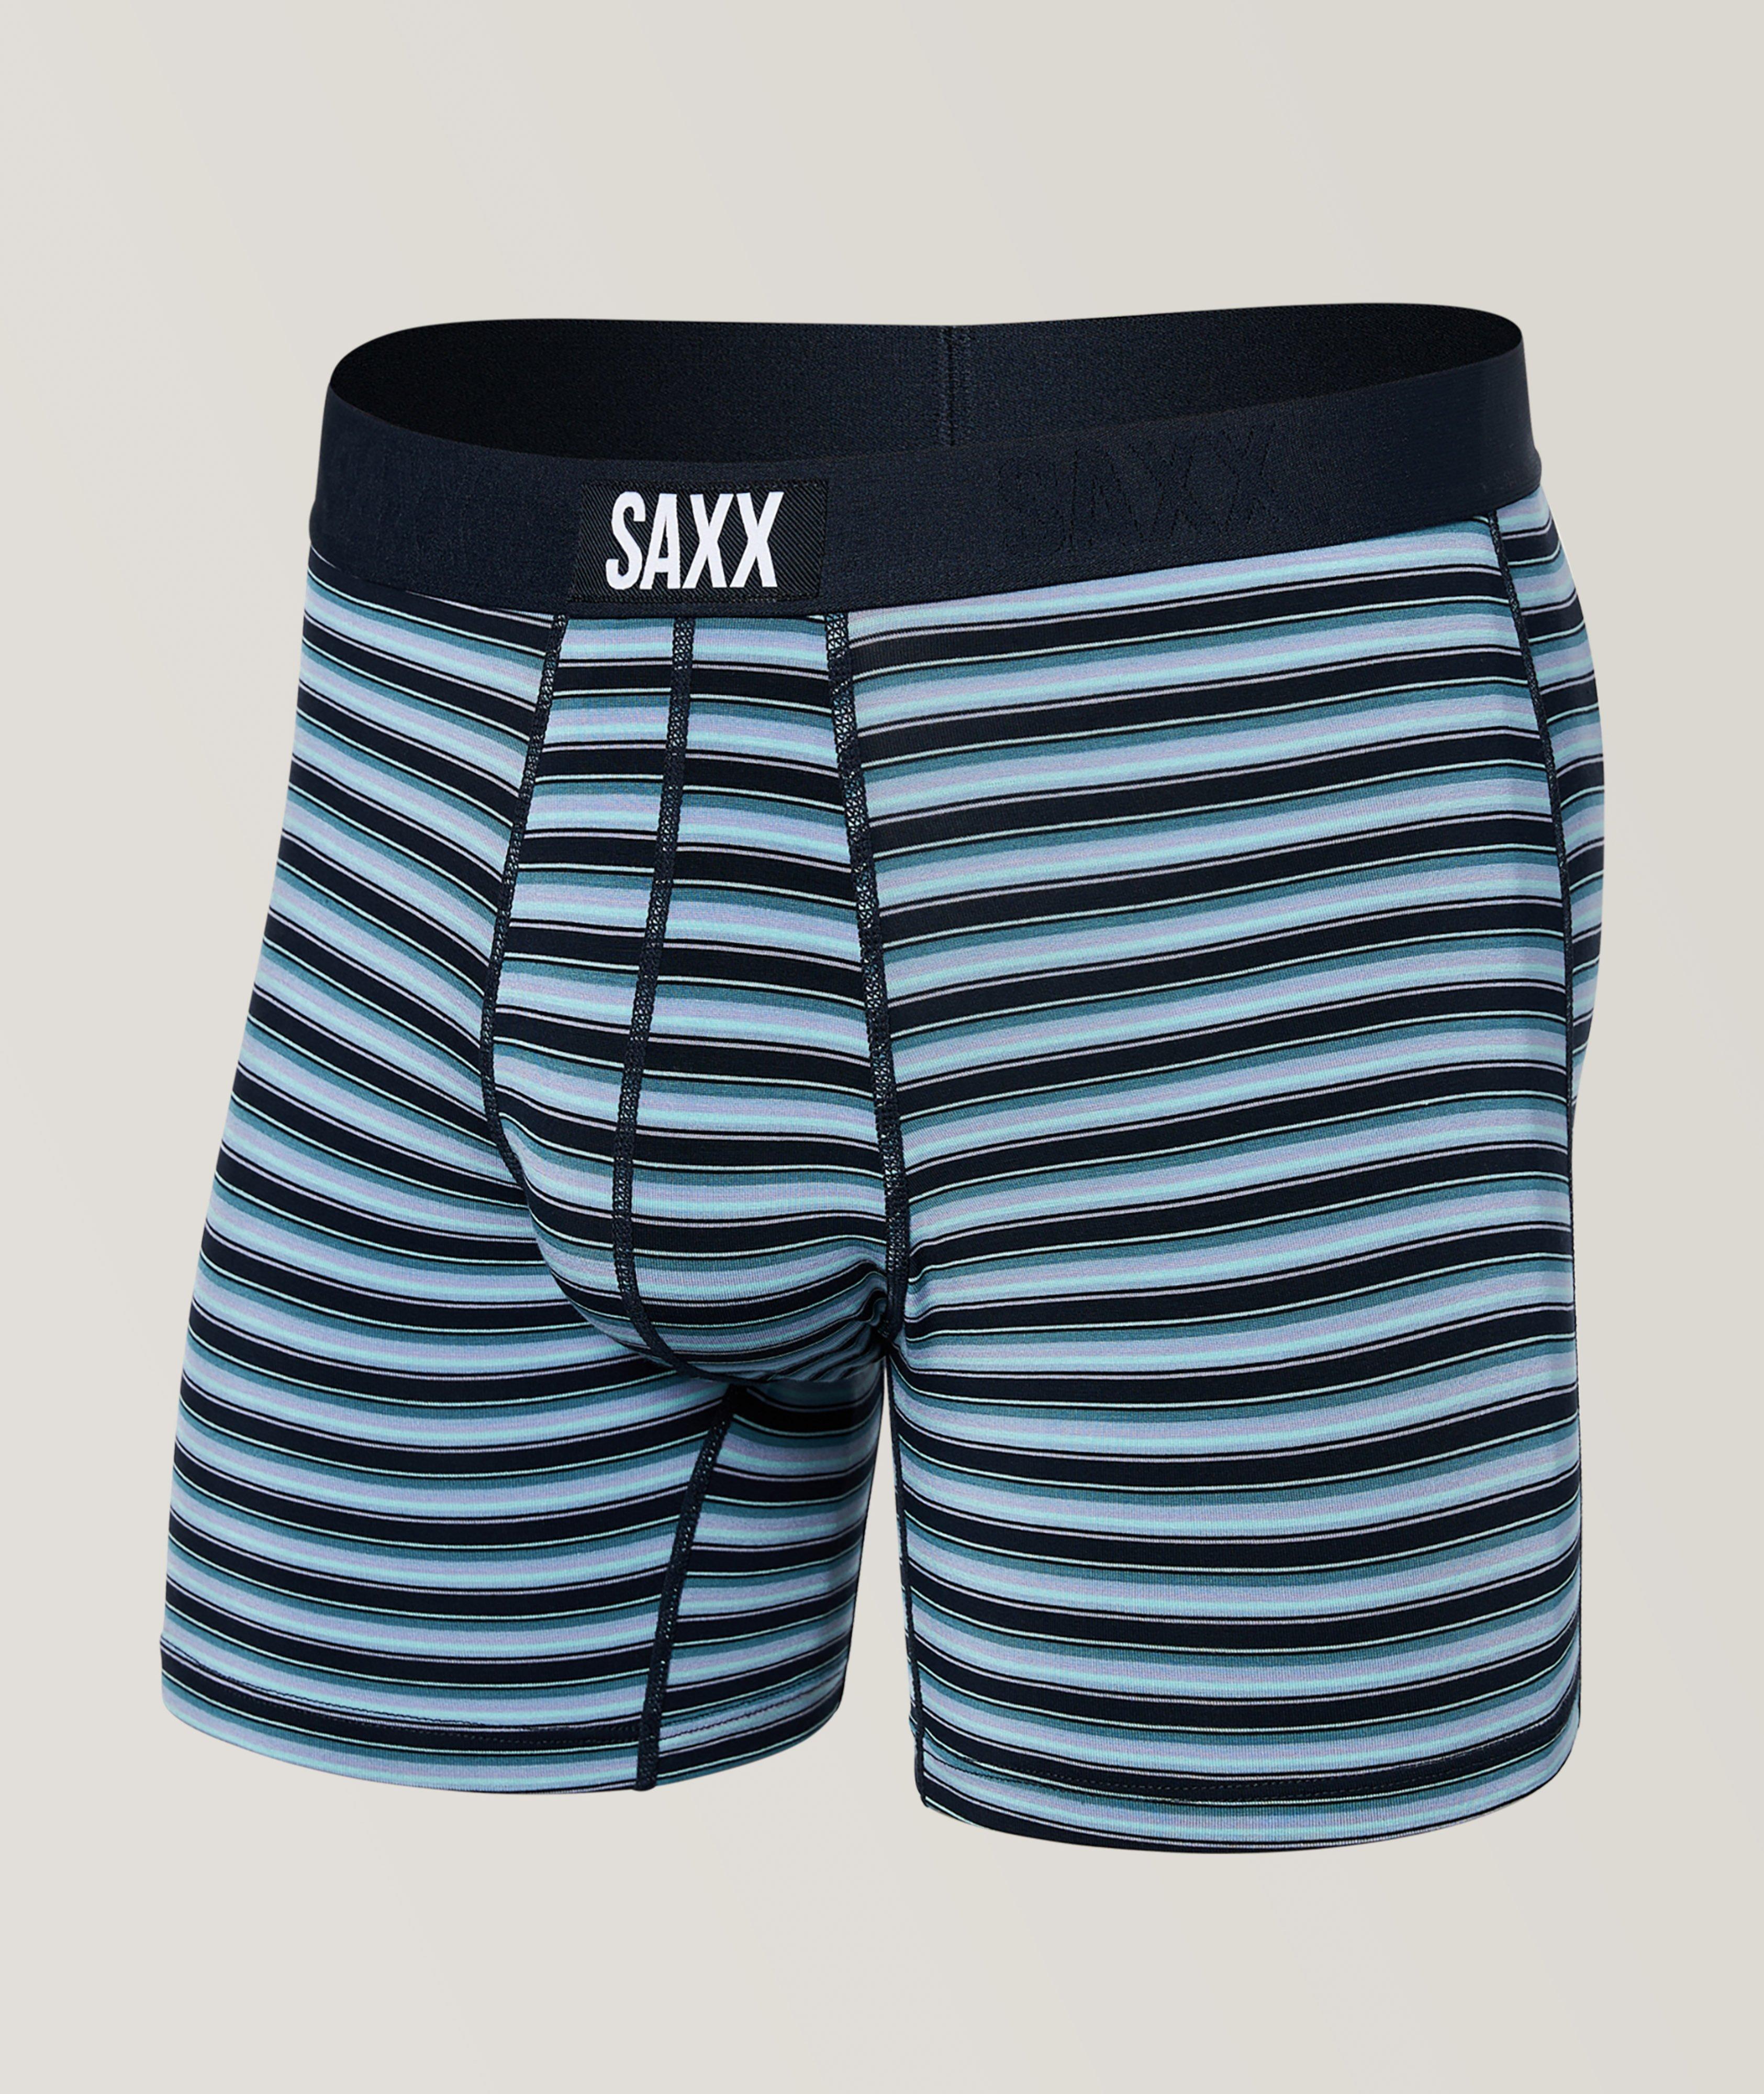 Luxury Men's Underwear and Loungewear from Wixson Paris